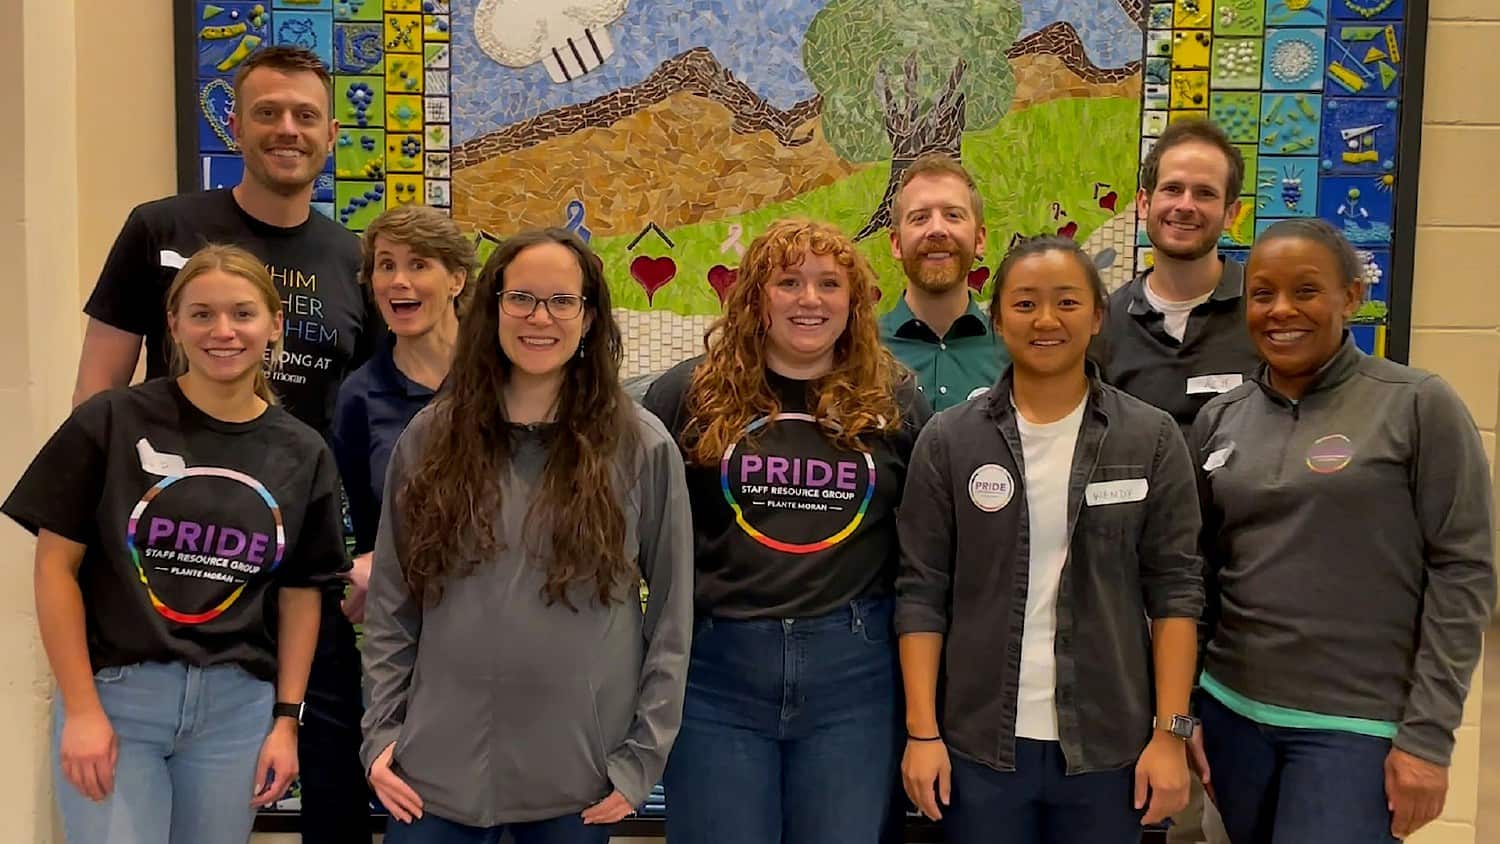  Plante Moran's LGBTQ employee resource group volunteering in the community